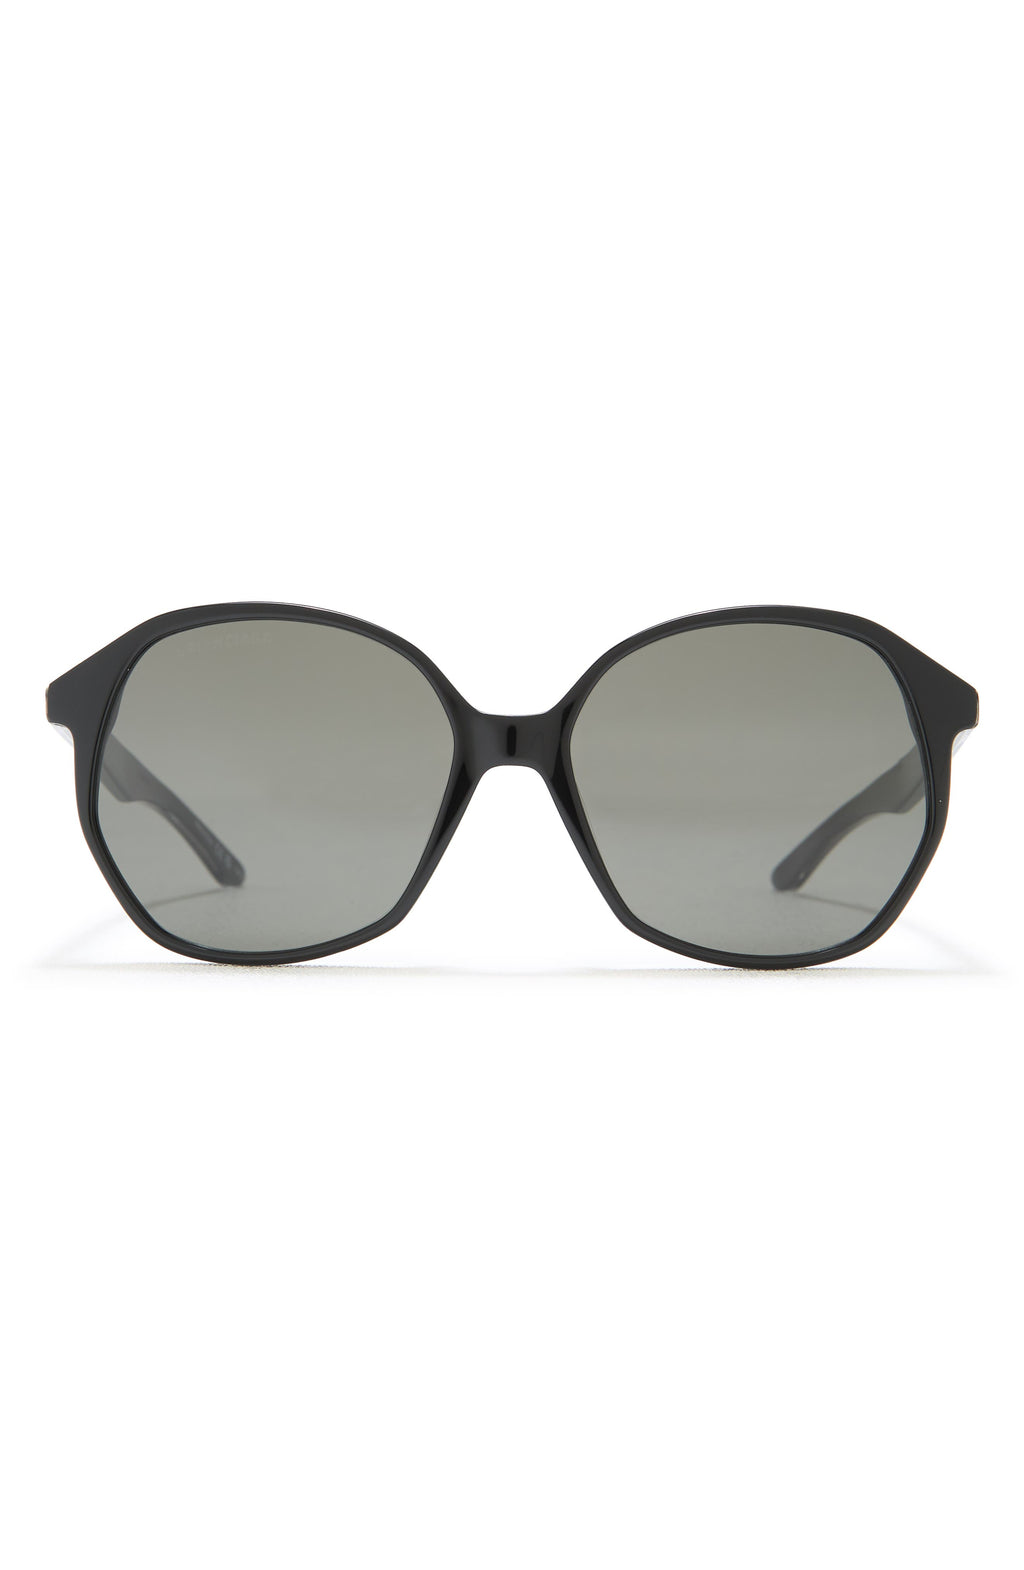 Balenciaga 58mm Round Sunglasses, Main, color, BLACK BLACK GREY